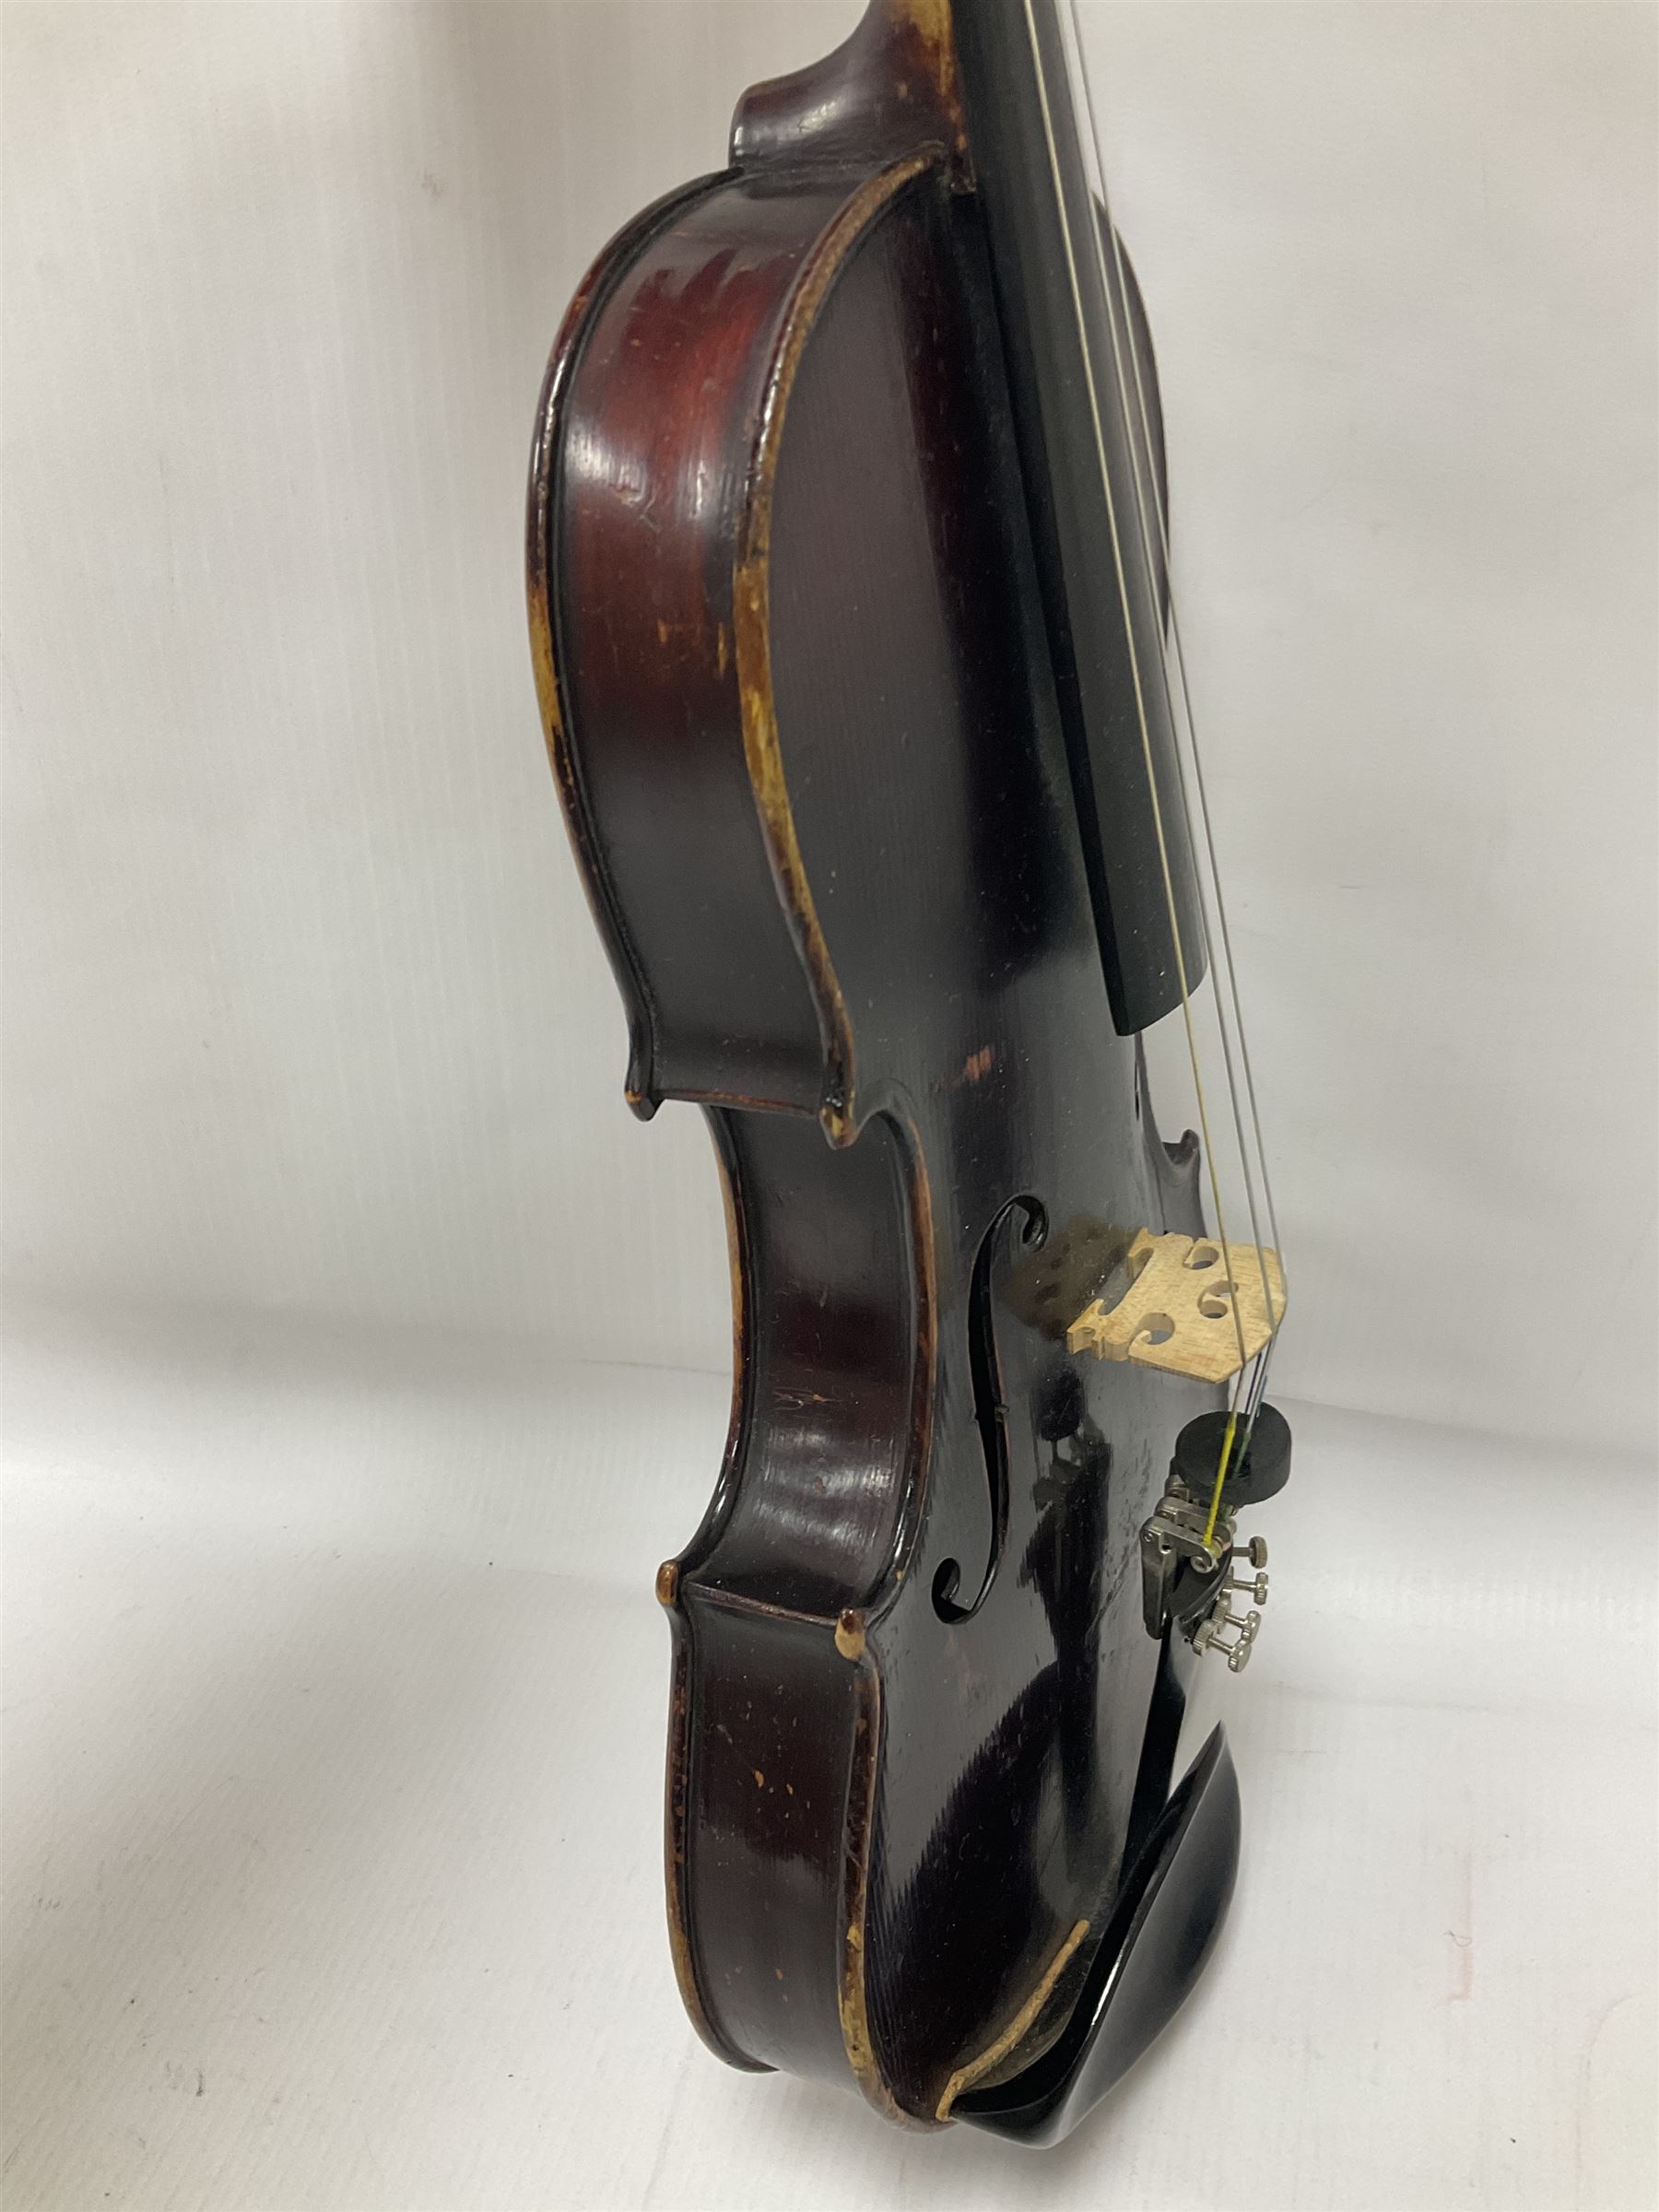 Neuner & Hornstiner early 20th century half size violin c1900 - Image 7 of 16